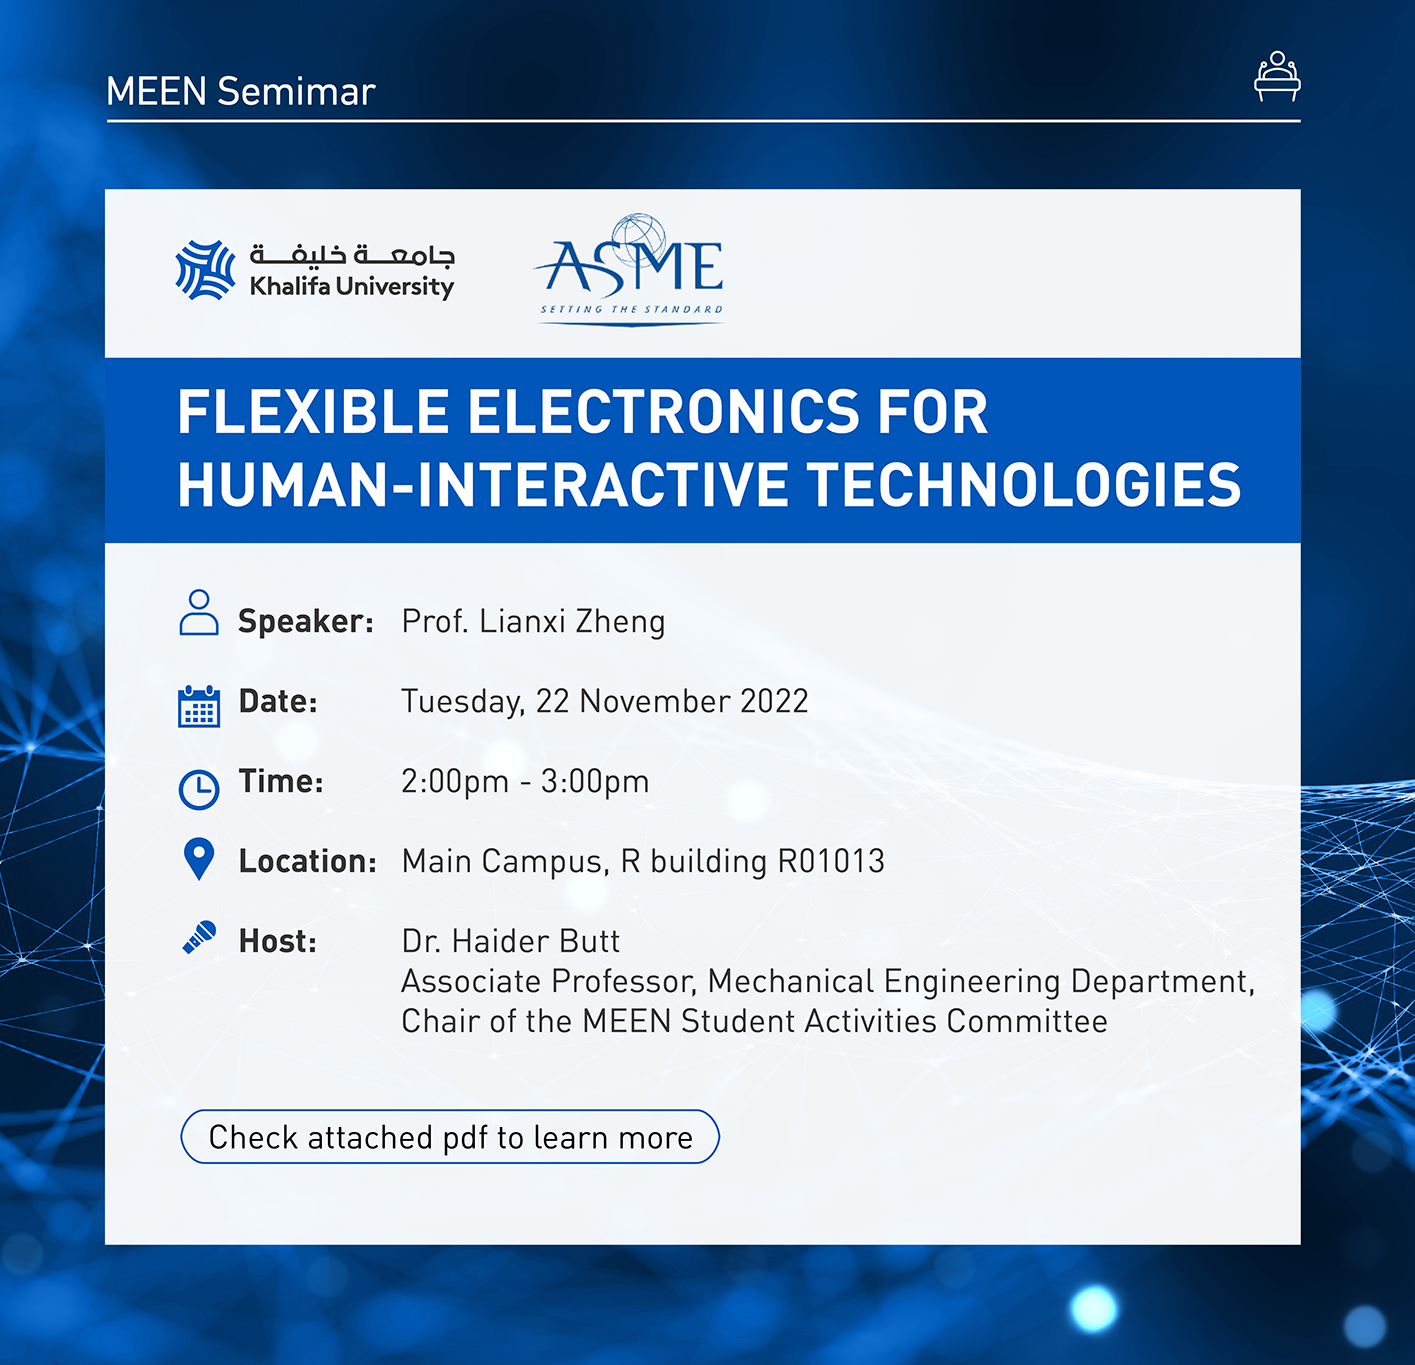 MEEN Seminar: Flexible Electronics for Human-Interactive Technologies